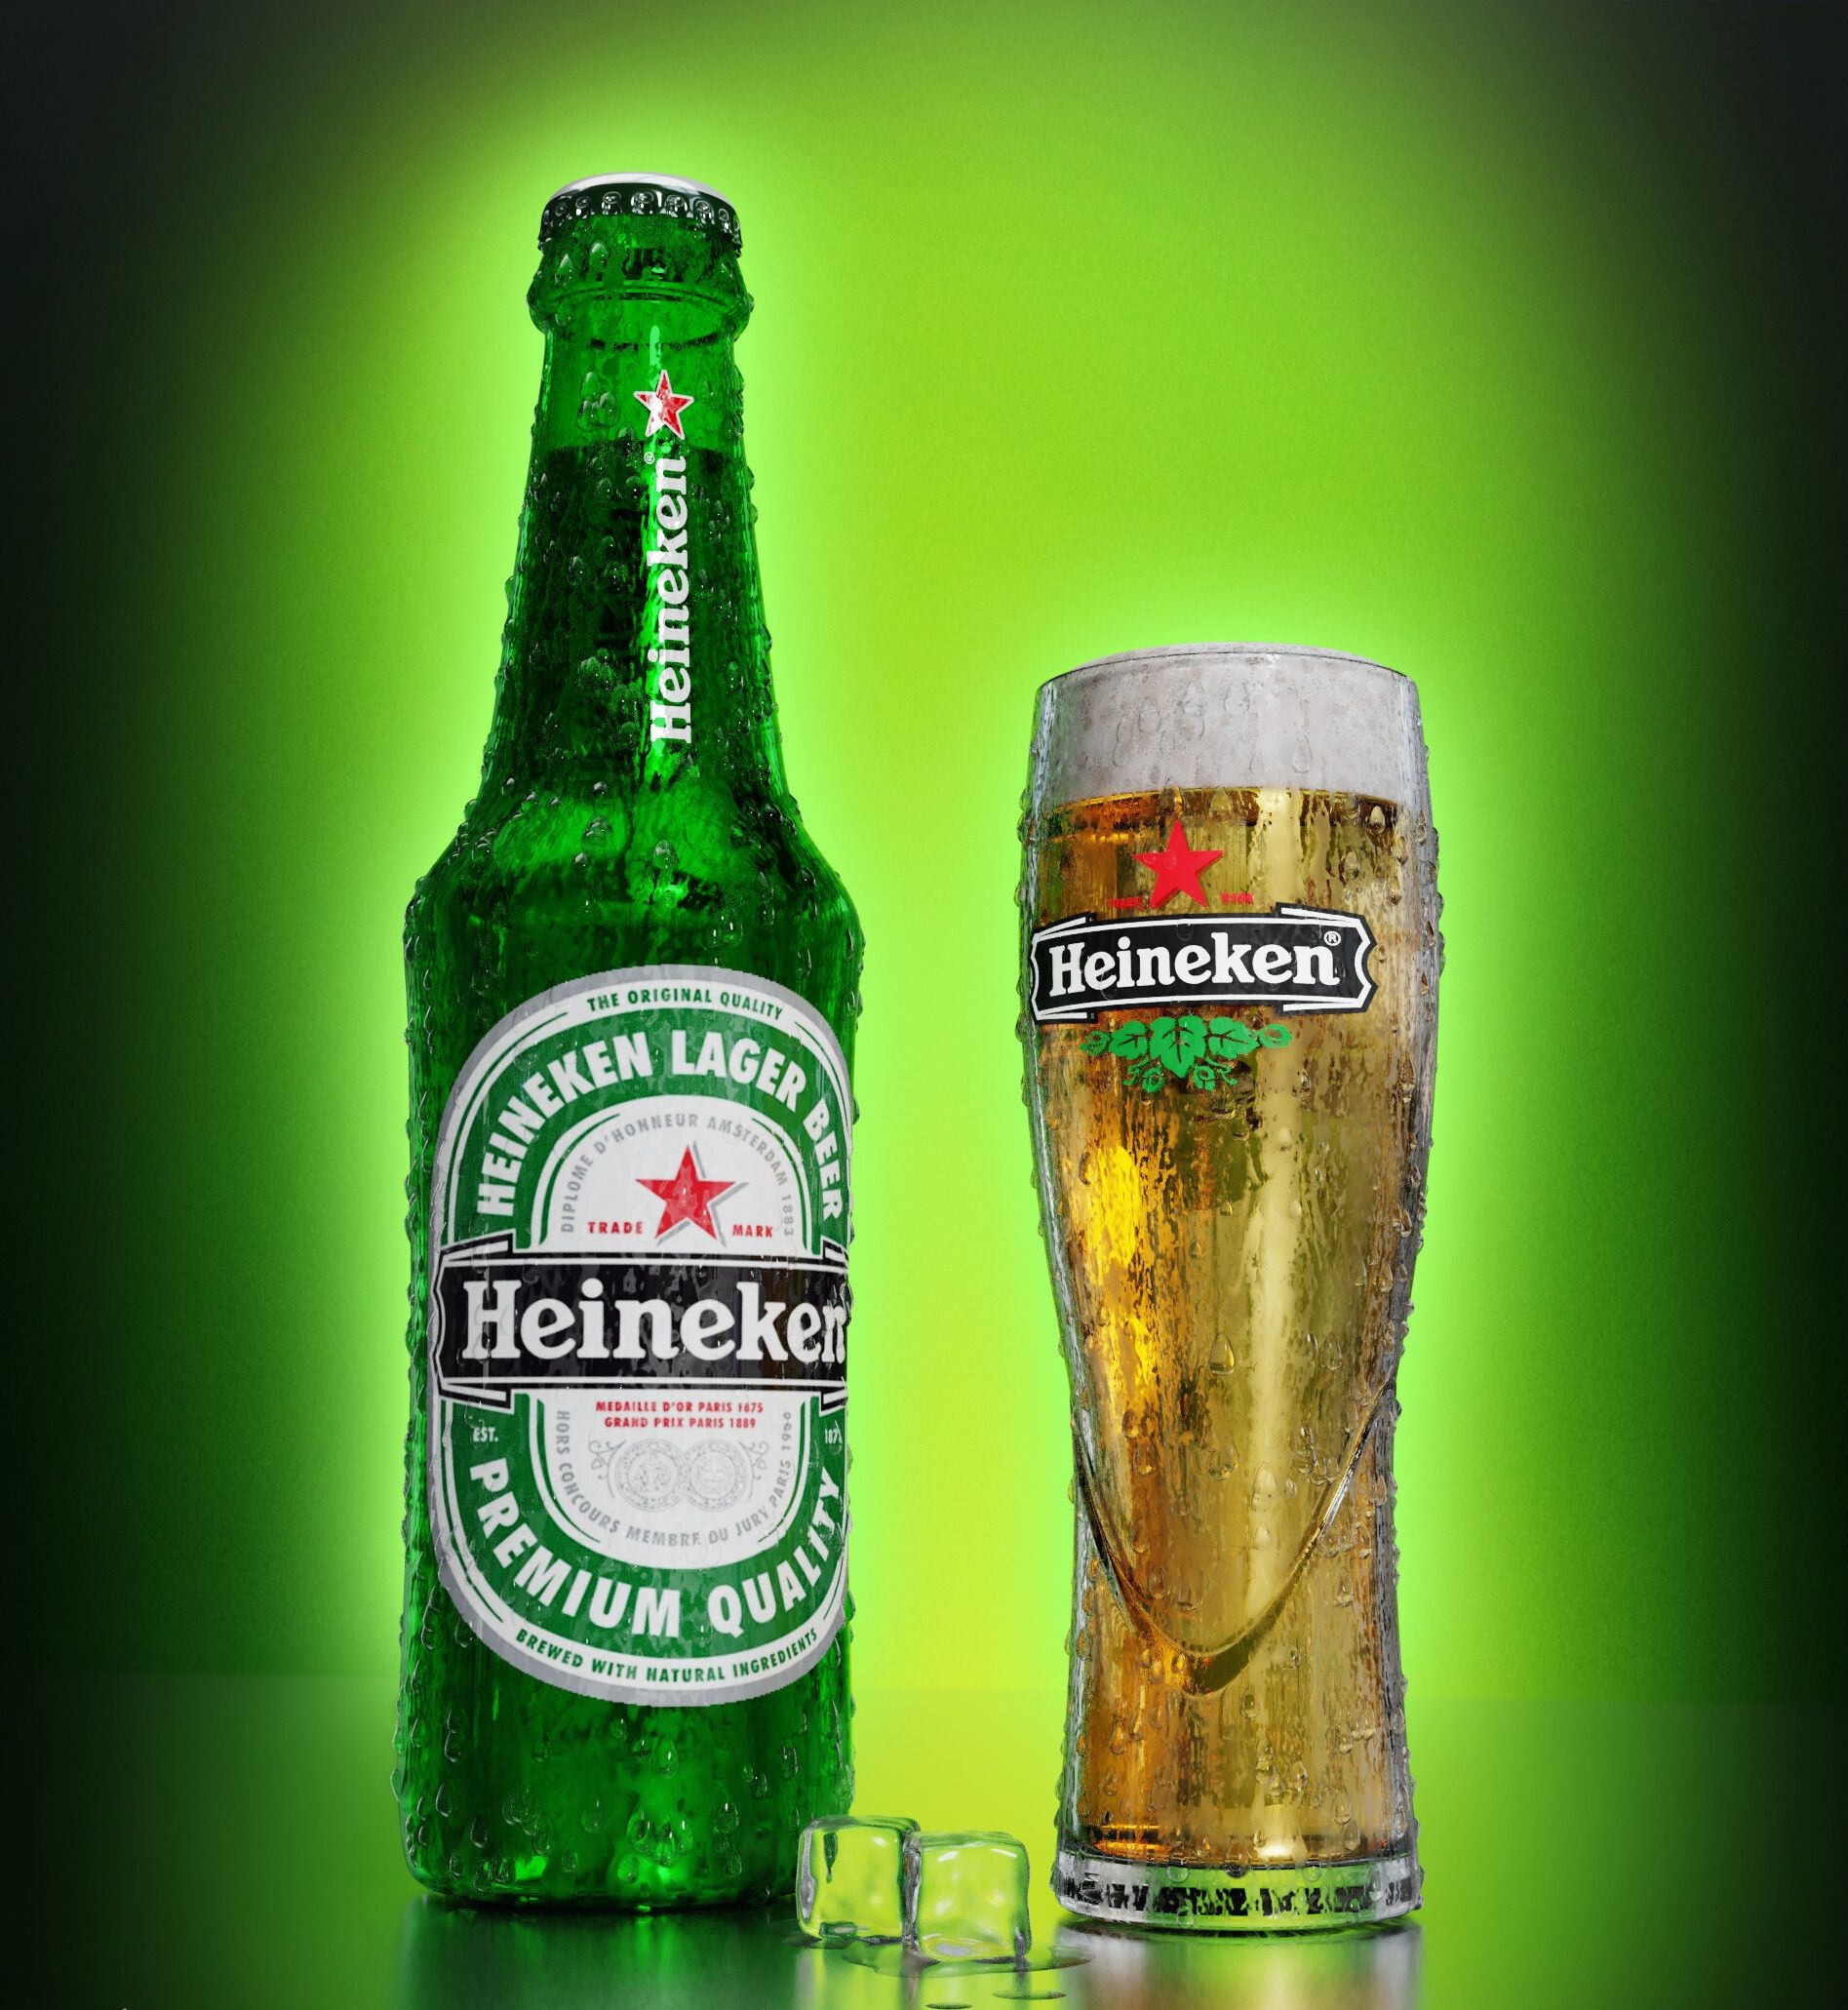 Heineken Beer in Vietnam - Where to buy and how much